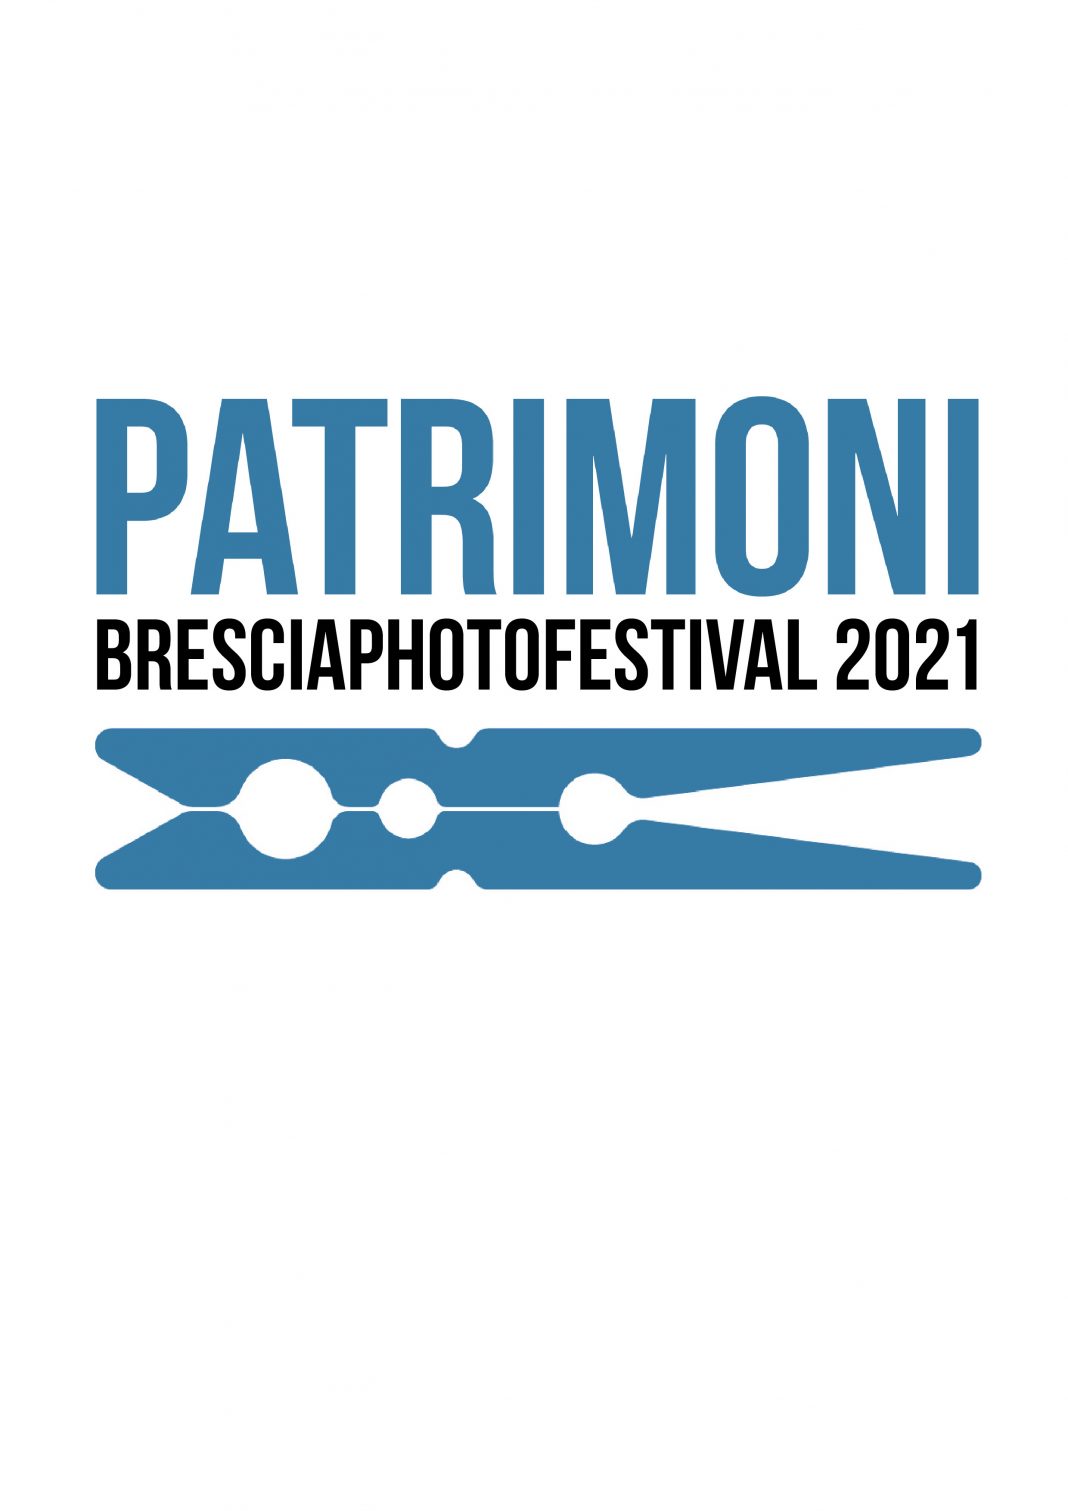 Brescia Photo Festoval 2021: Patrimonihttps://www.exibart.com/repository/media/formidable/11/img/c9e/def2021-1068x1511.jpg